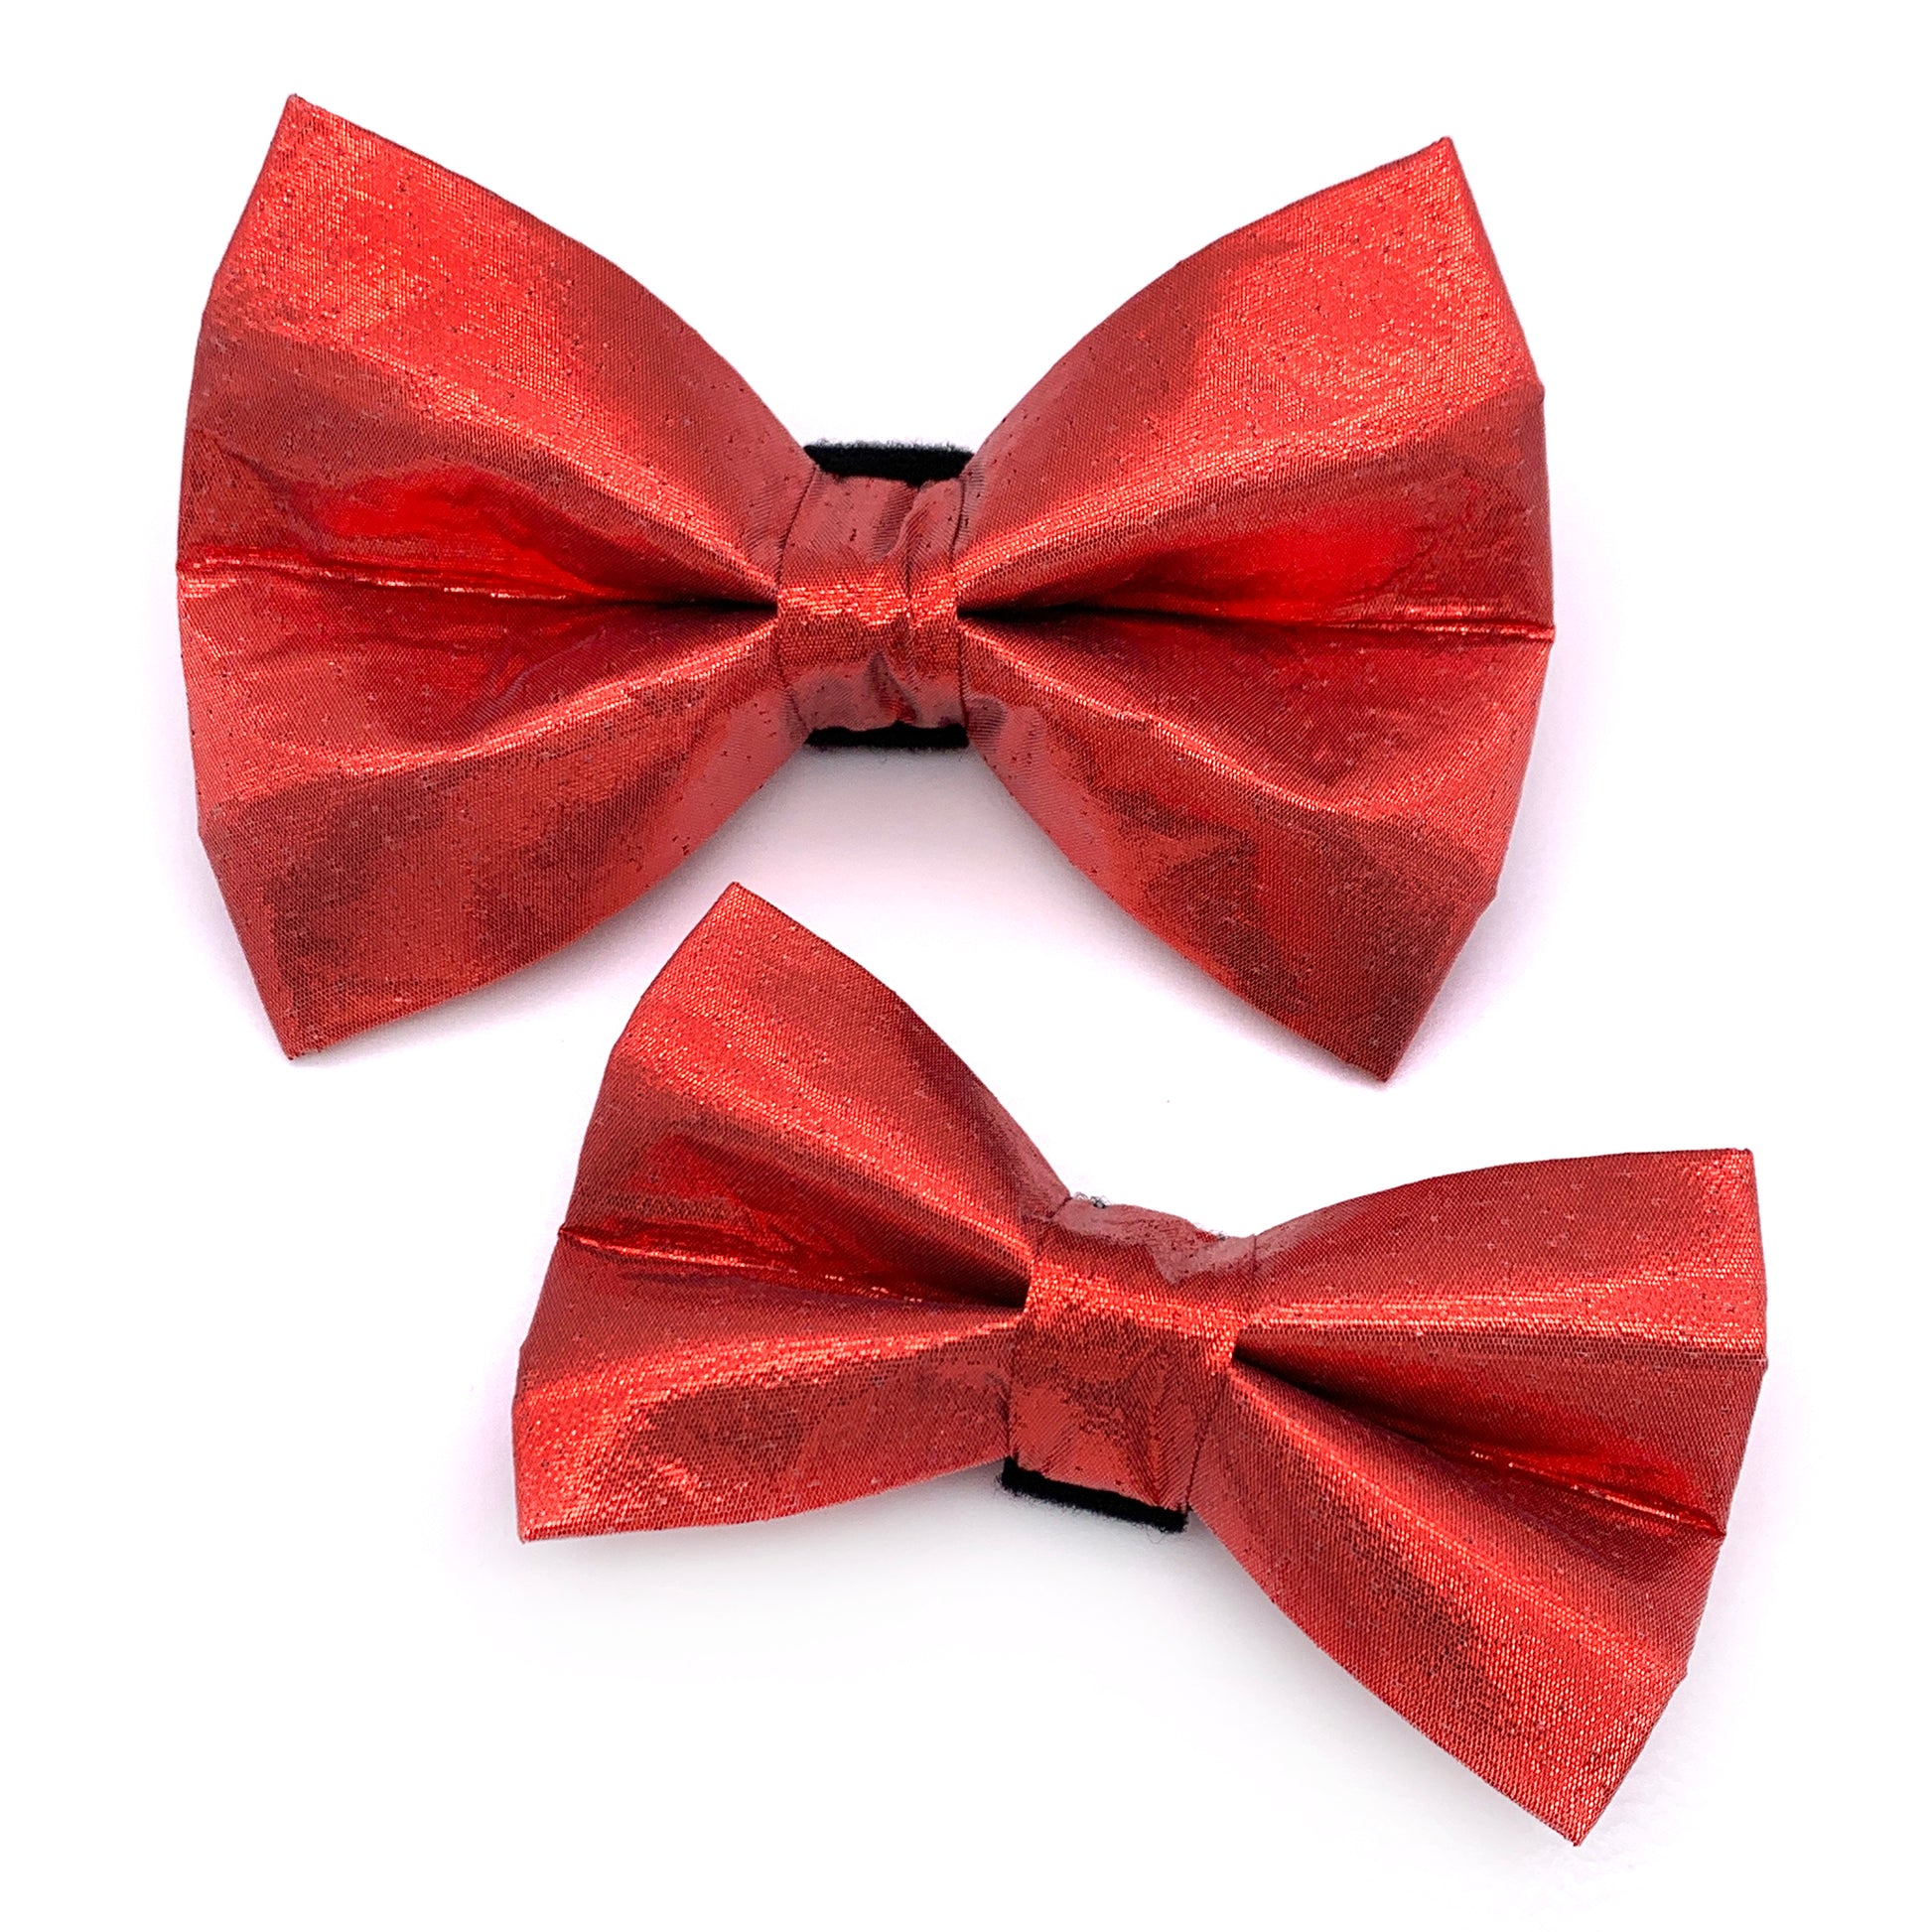 Metallic Red Dog Bow Tie